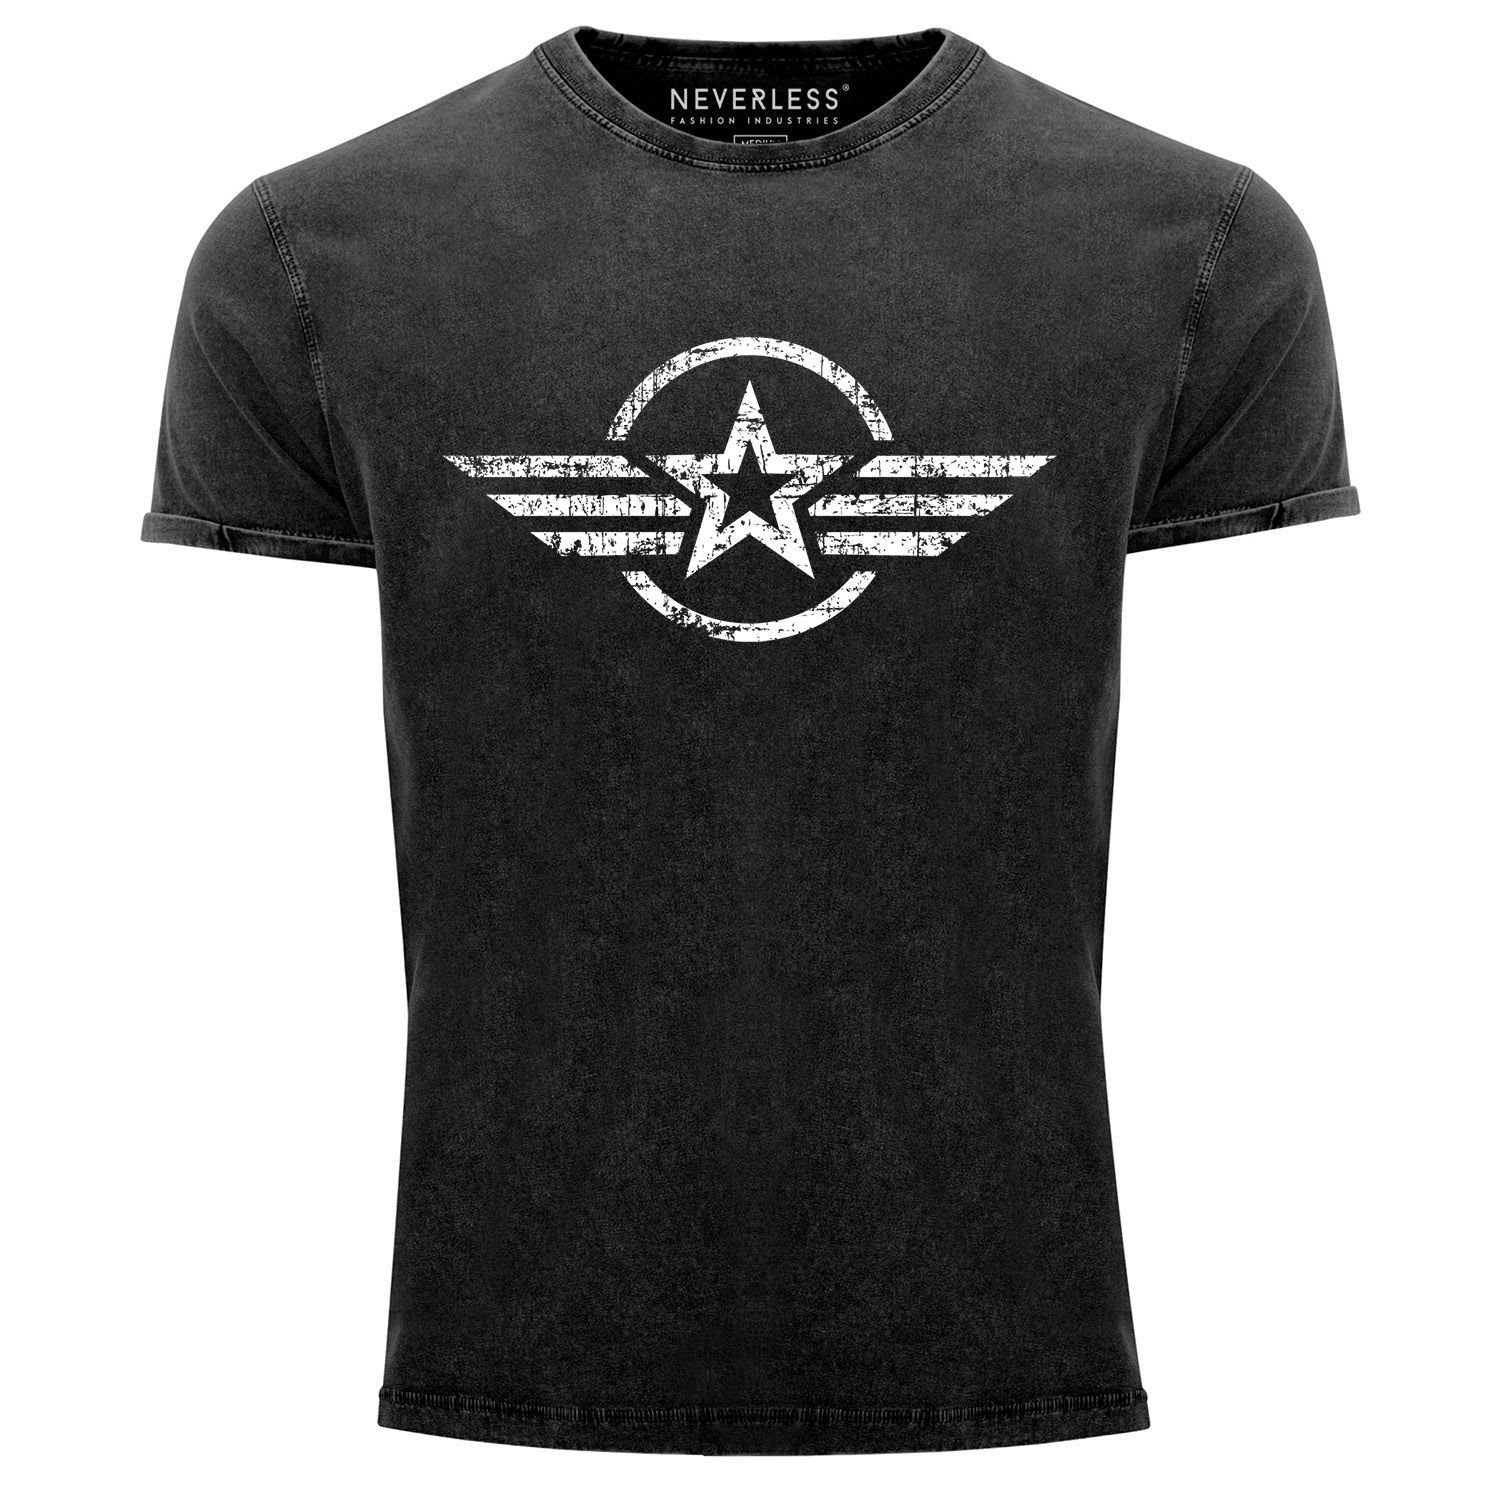 Neverless Print-Shirt Herren Stern Military Fit Used Aufdruck Aufdruck mit Shirt Printshirt Print Airforce Slim Vintage Look Army T-Shirt schwarz Neverless®